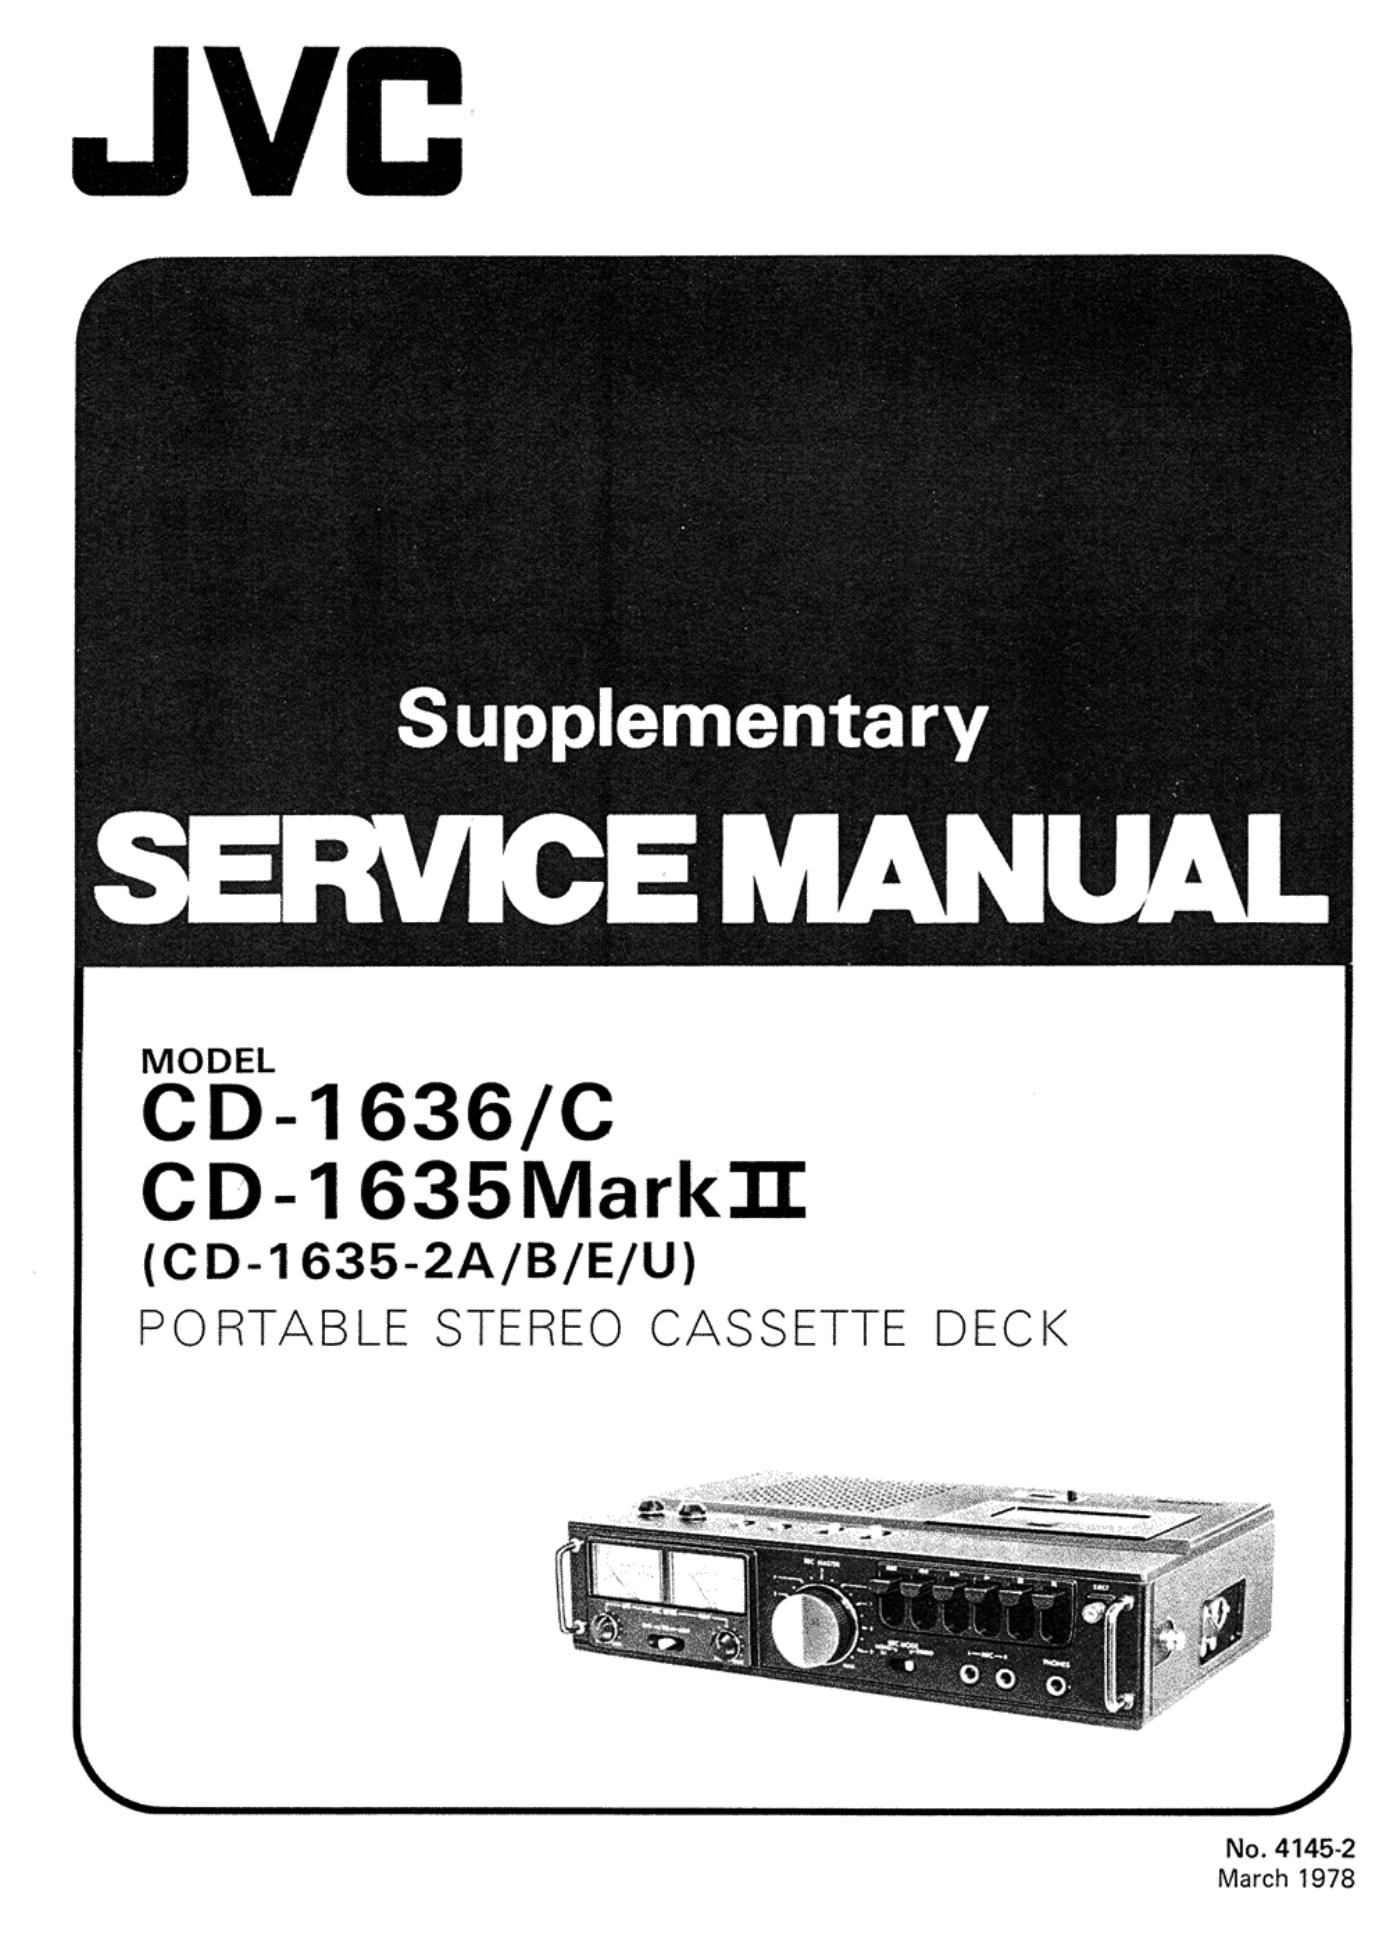 Jvc CD 1635 Mk2 Service Manual Supp